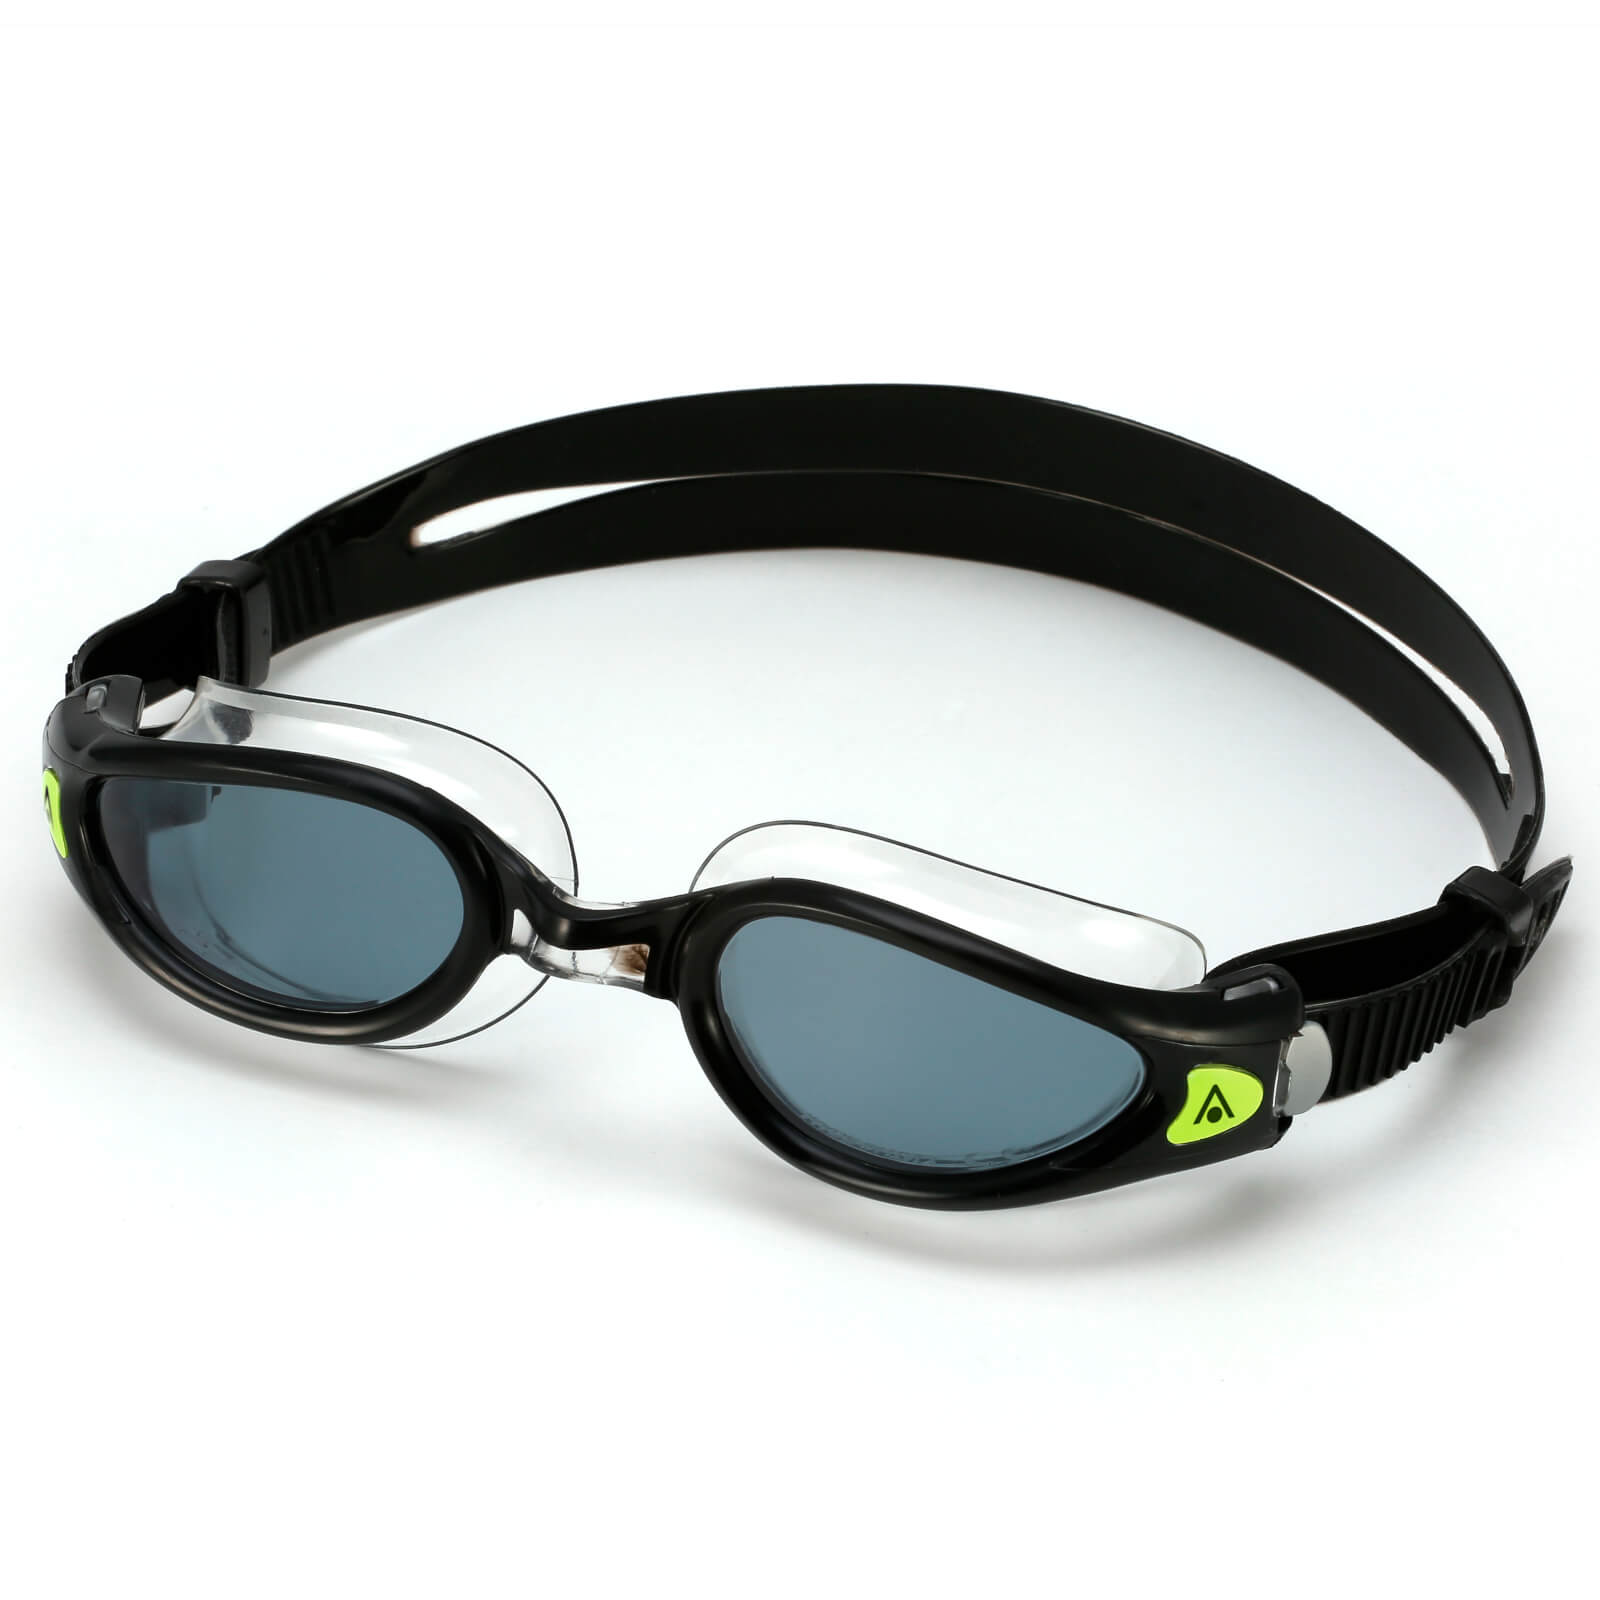 Men's Swimming Goggles Aqua Sphere Kaiman Exo Adult Triathlon Open Water Black/Clear - Smoke